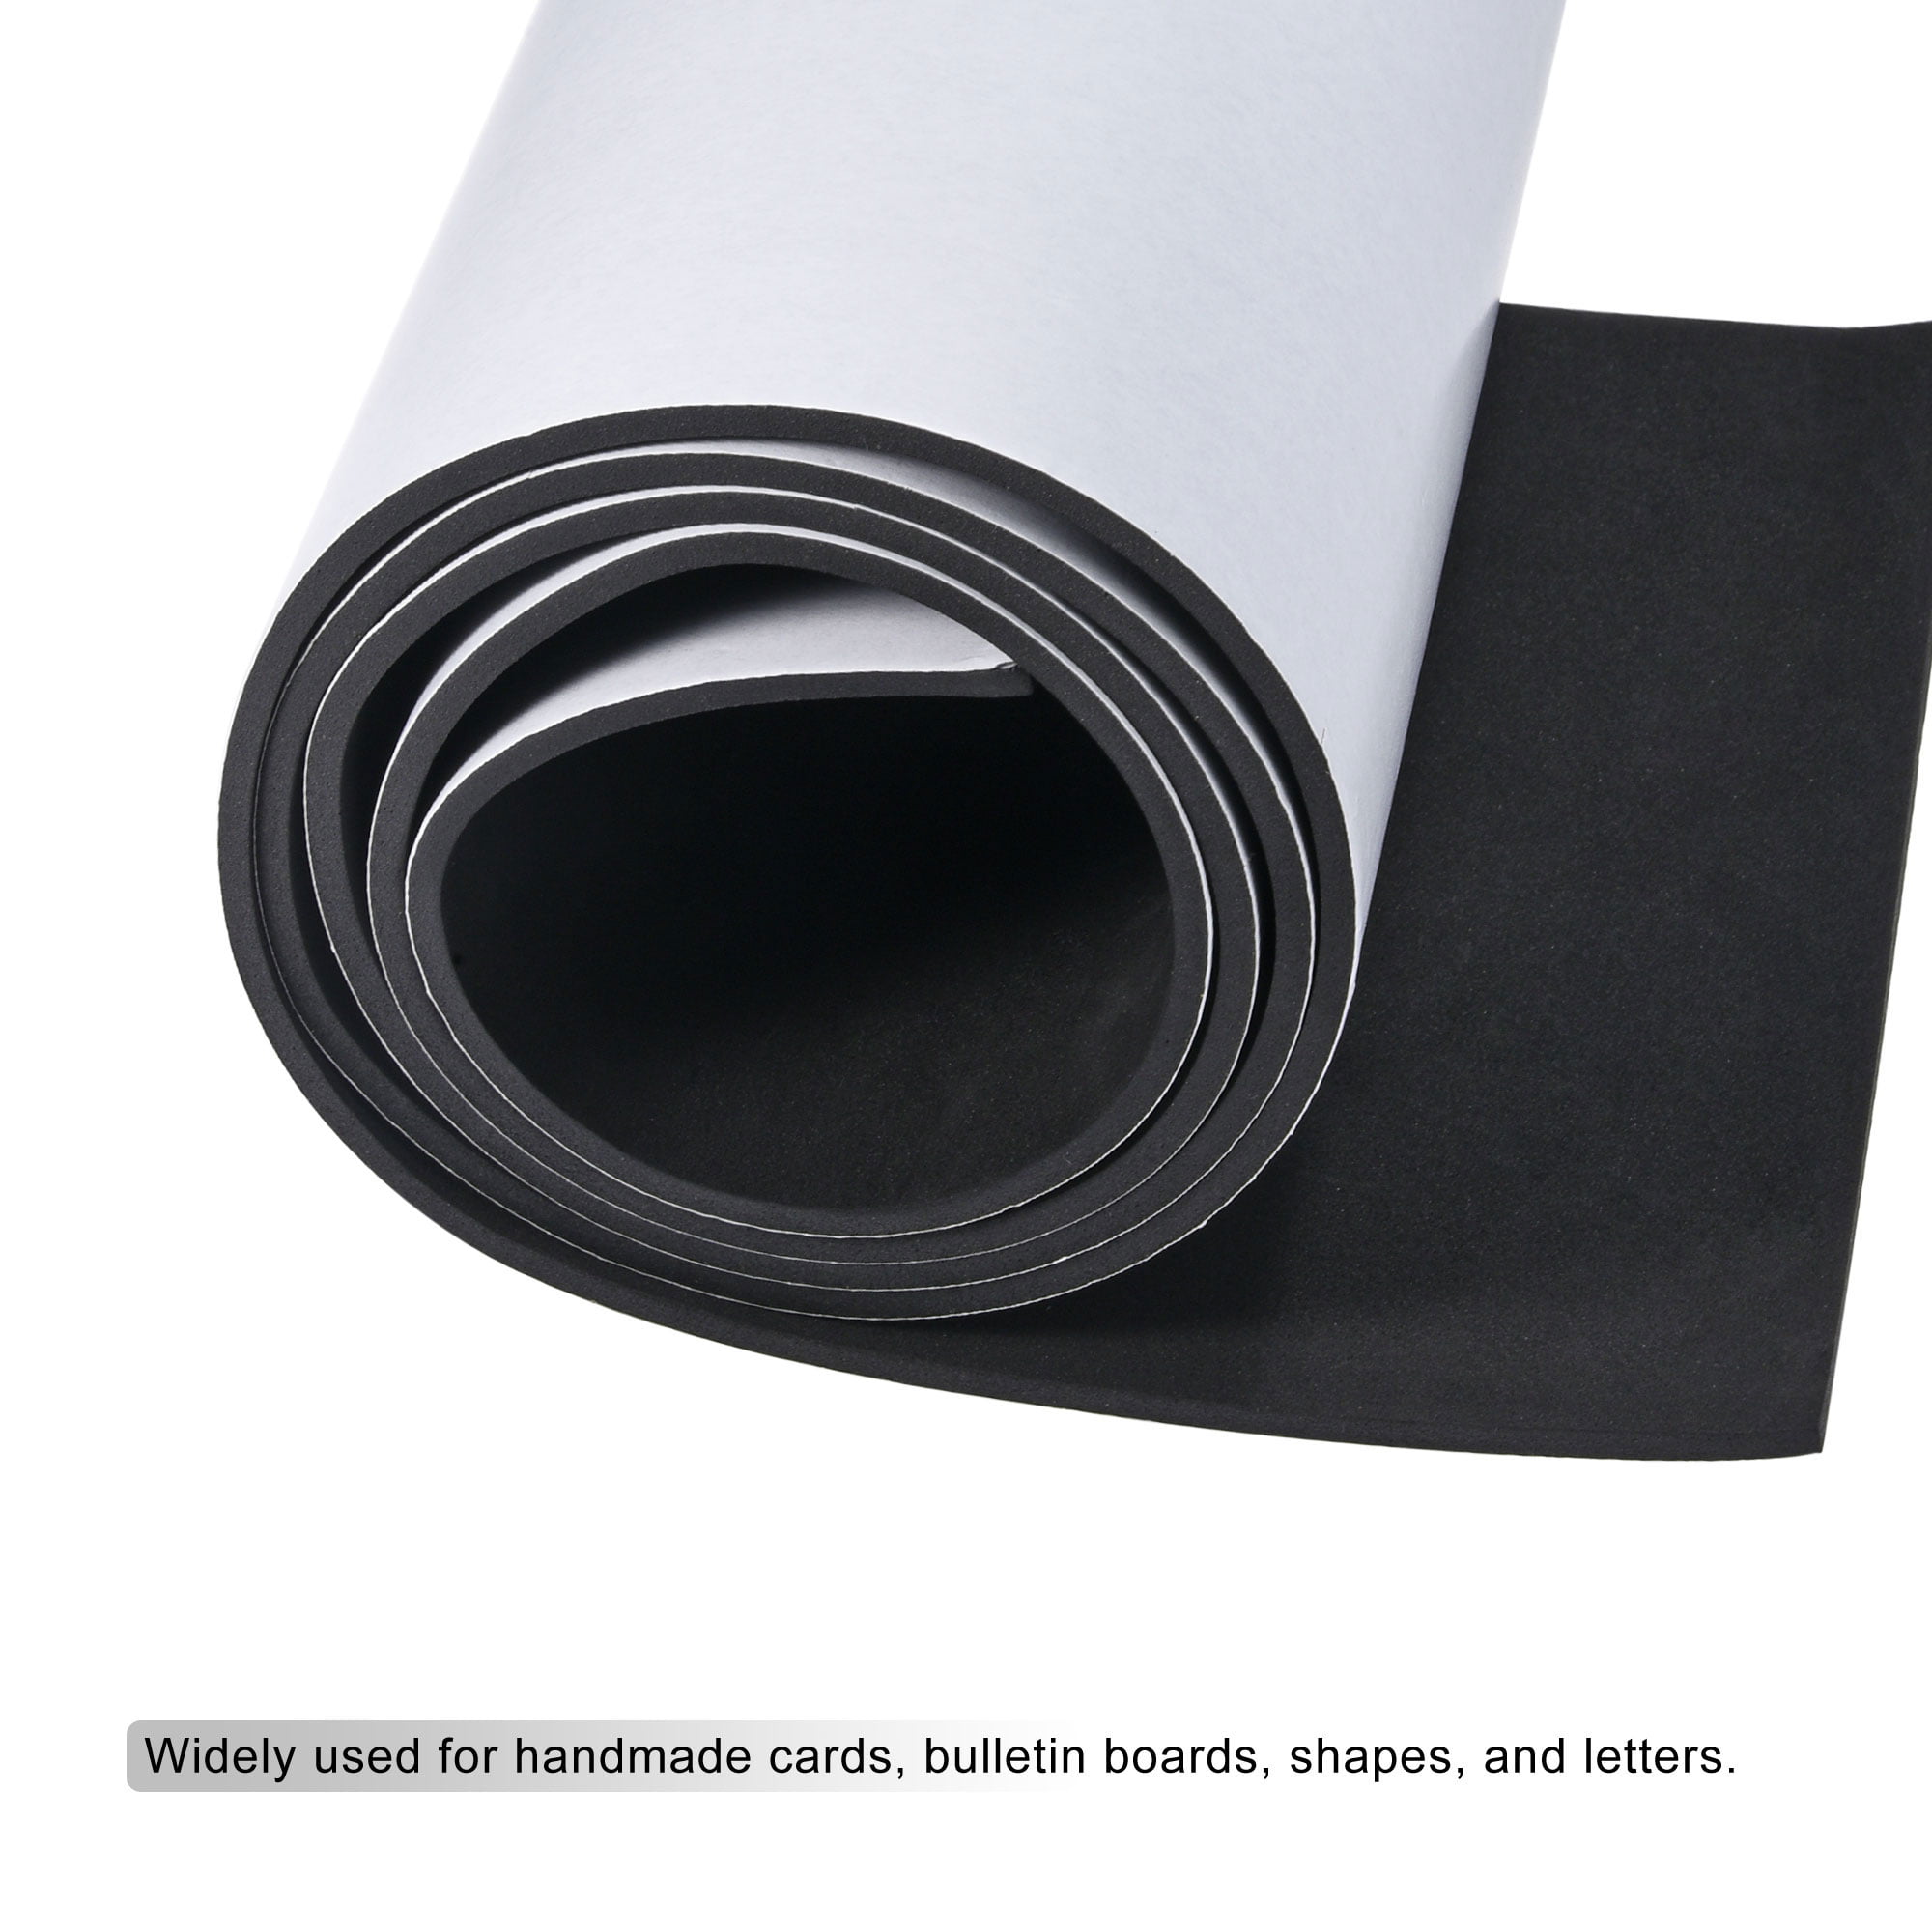 5 Packs Adhesive Foam Padding Sheets 1/4 inch Thick x 8 inch Long x 12 inch Wide Eva Foam Sheet Self Stick Anti Vibration Pads, Black